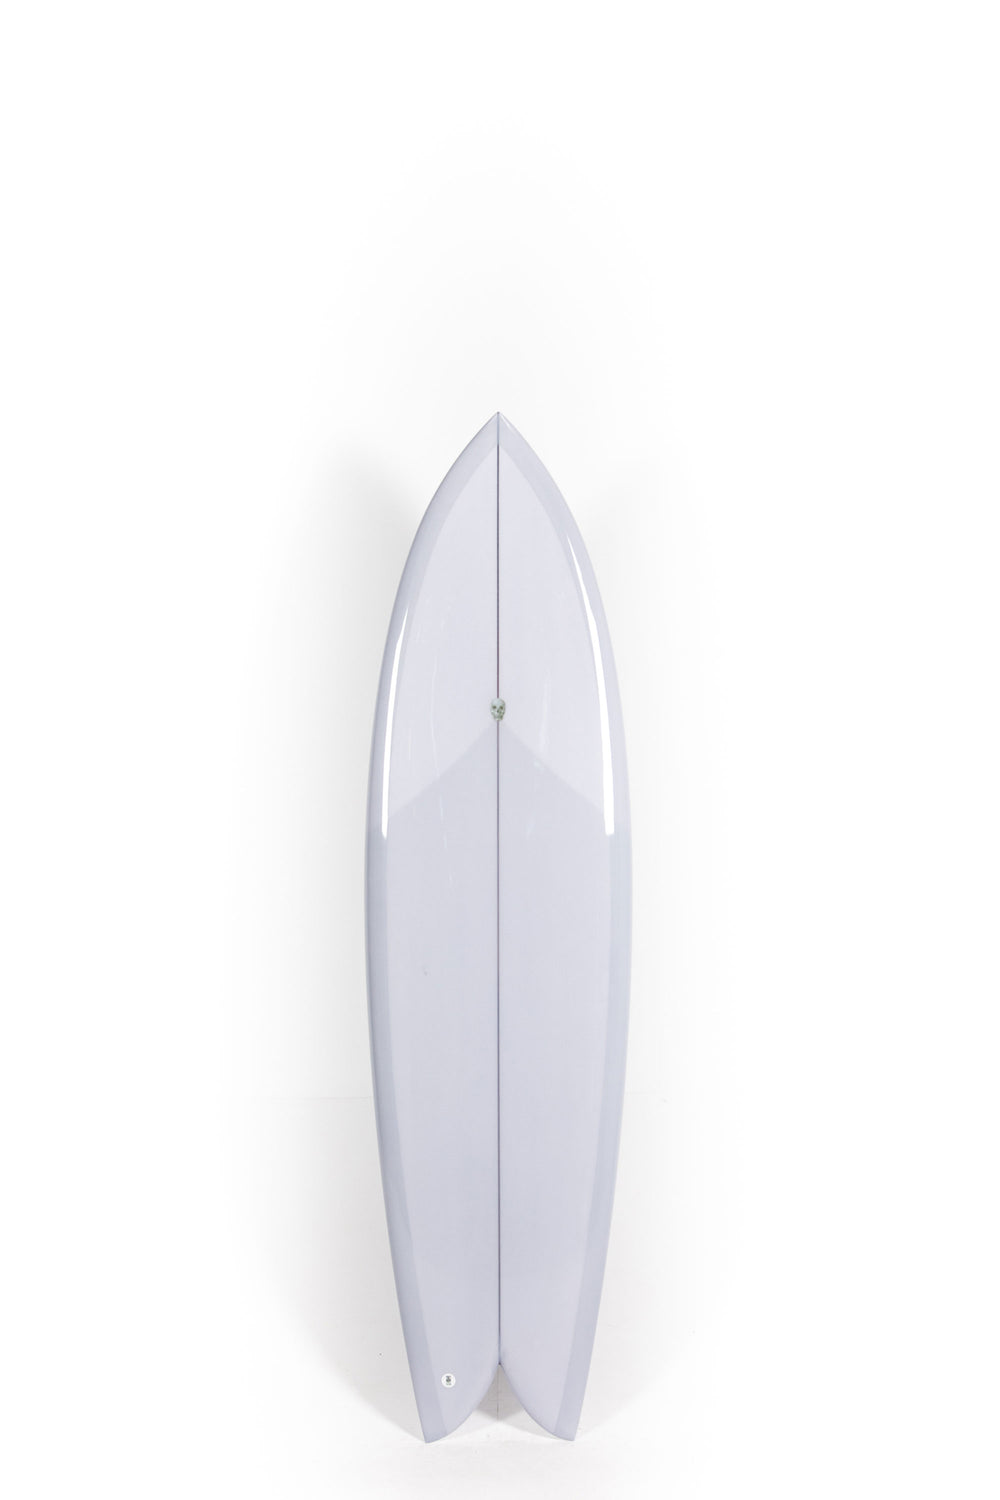 Pukas Surf Shop - Christenson Surfboards - LONG PHISH - 6'6